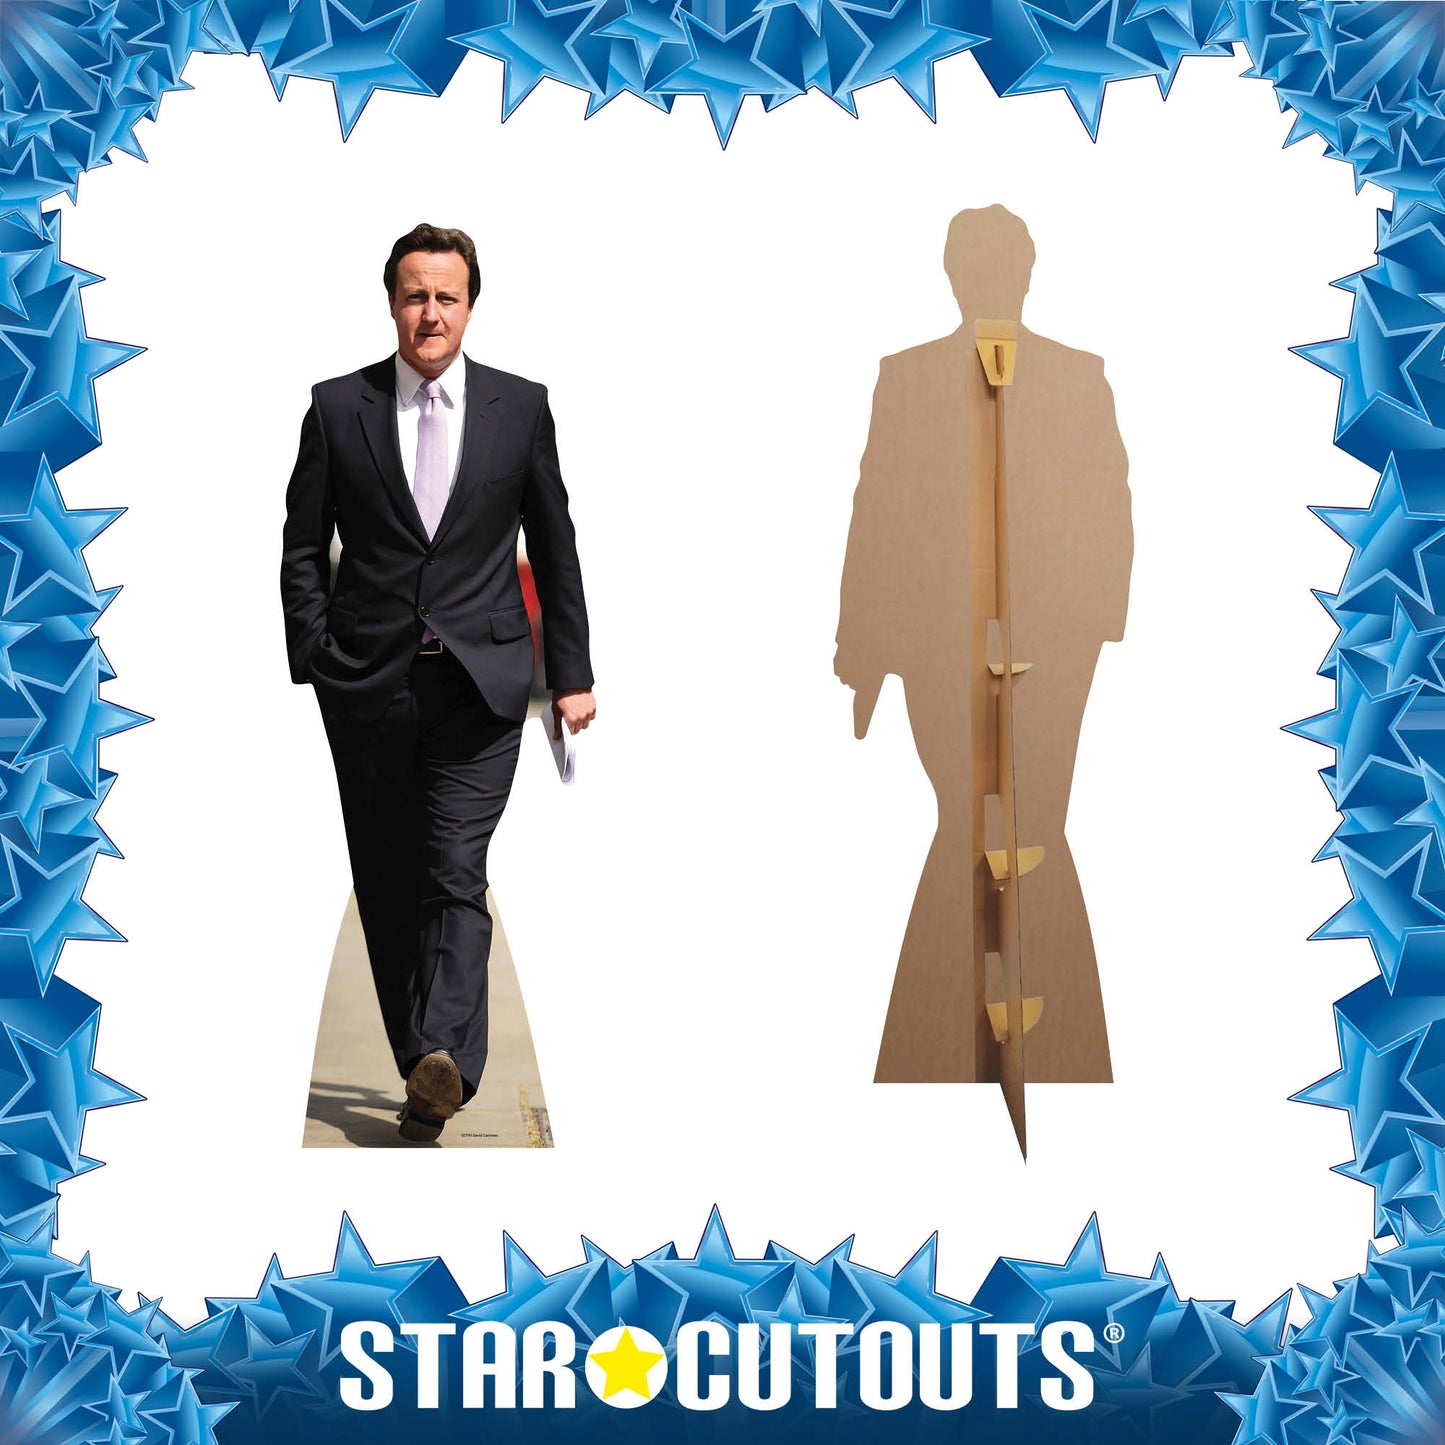 David Cameron  Cardboard Cutout Politician